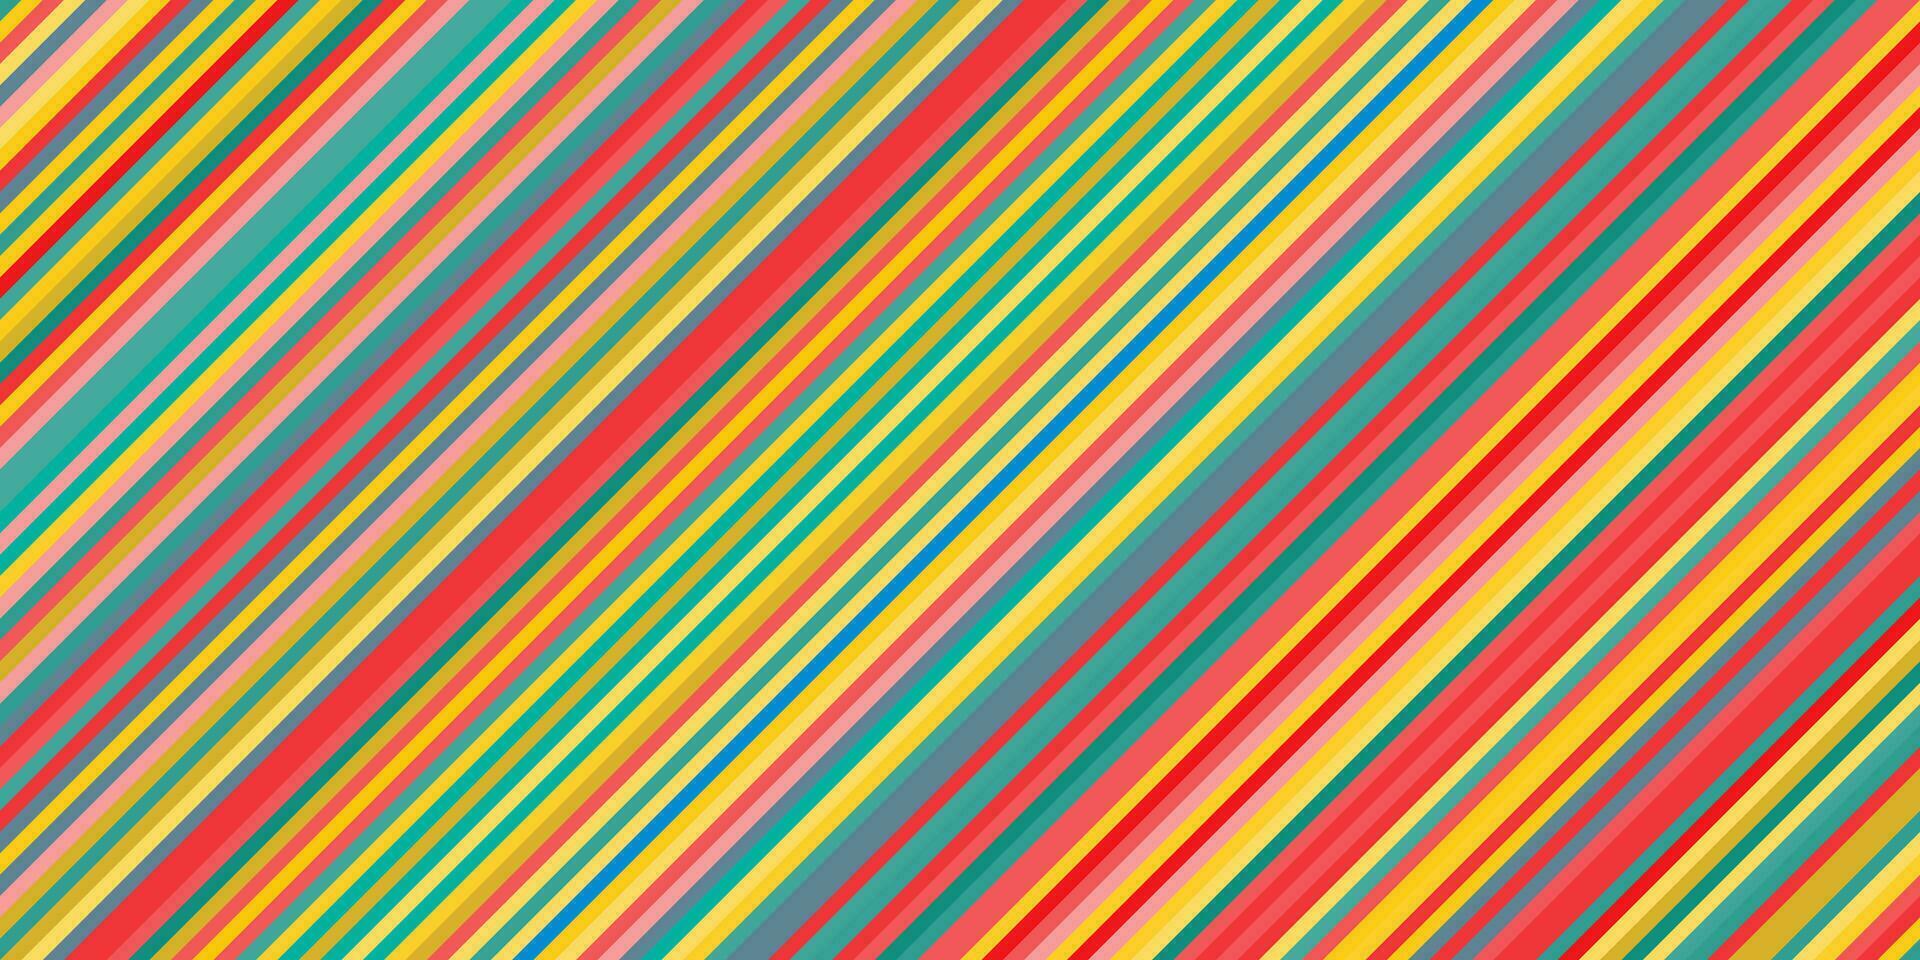 mehrfarbig bunt diagonal Linien Hintergrund vektor